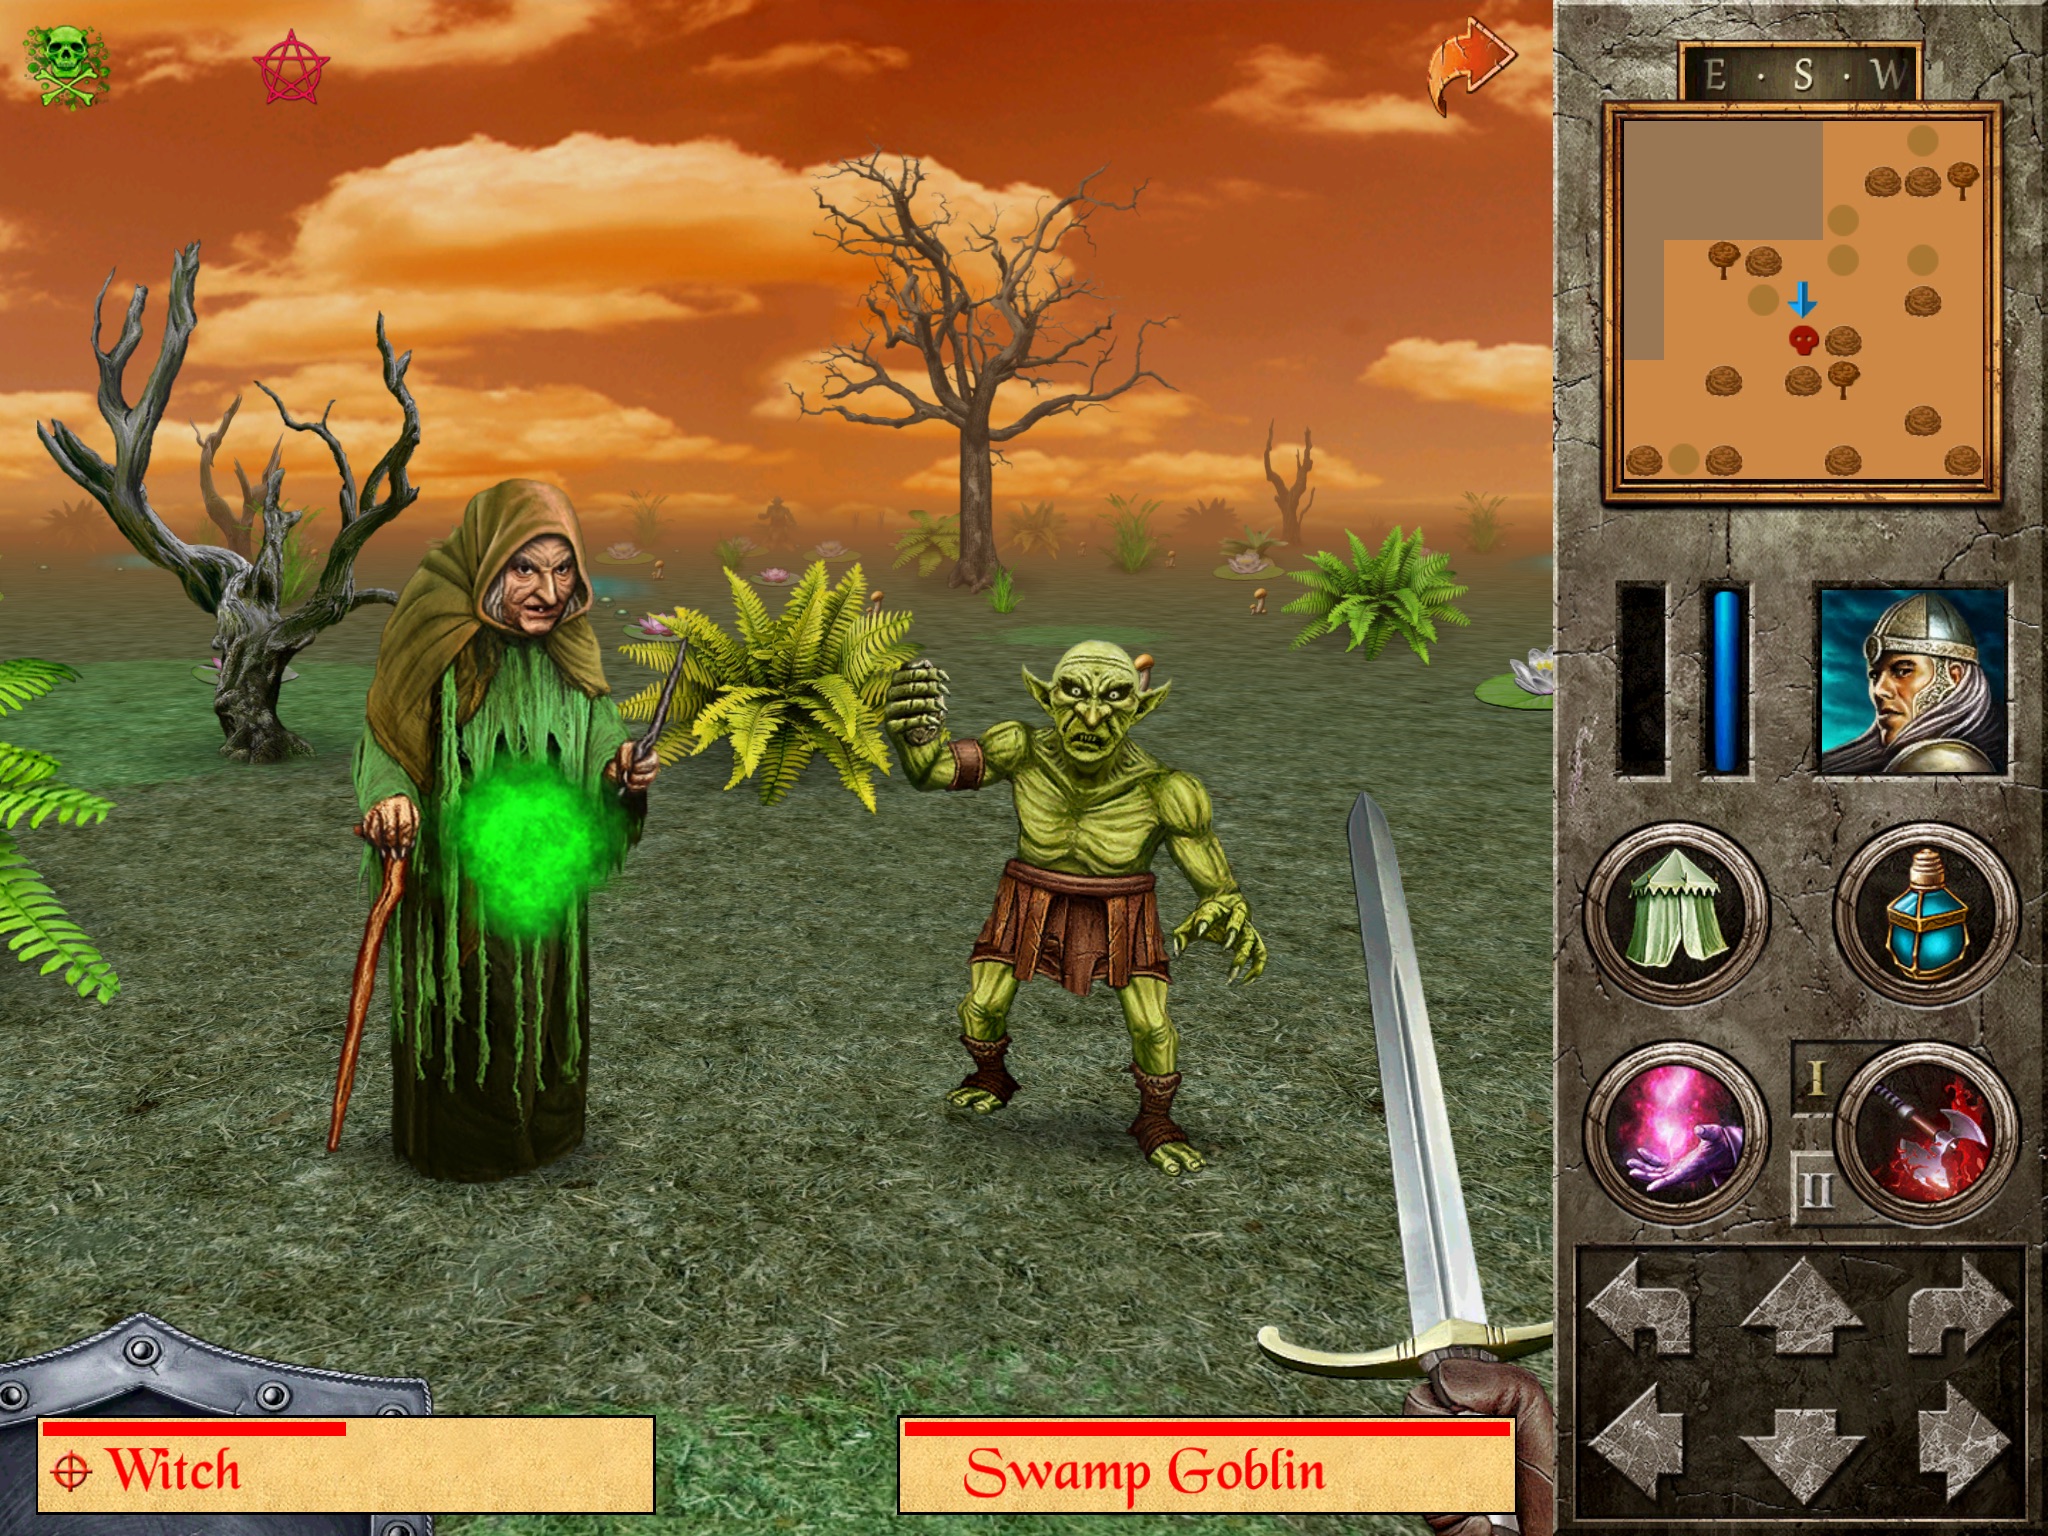 The Quest screenshot 3